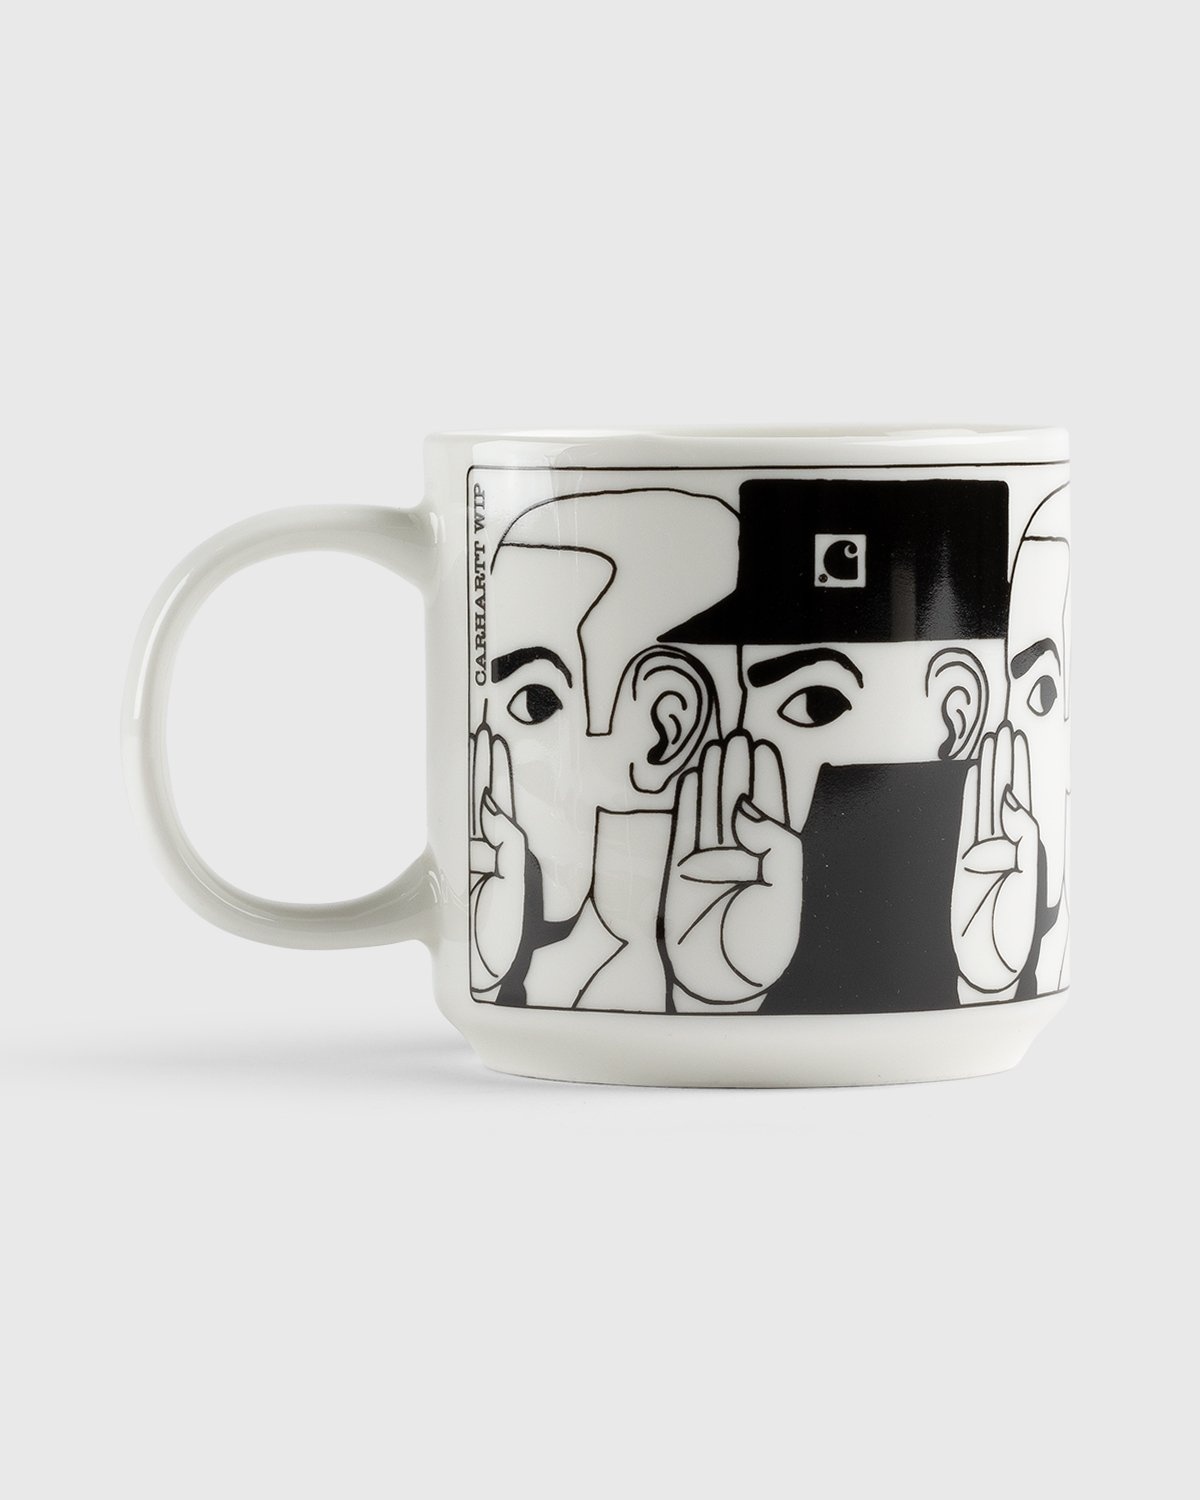 Carhartt WIP – Whisper Mug White Black - Ceramics - White - Image 1